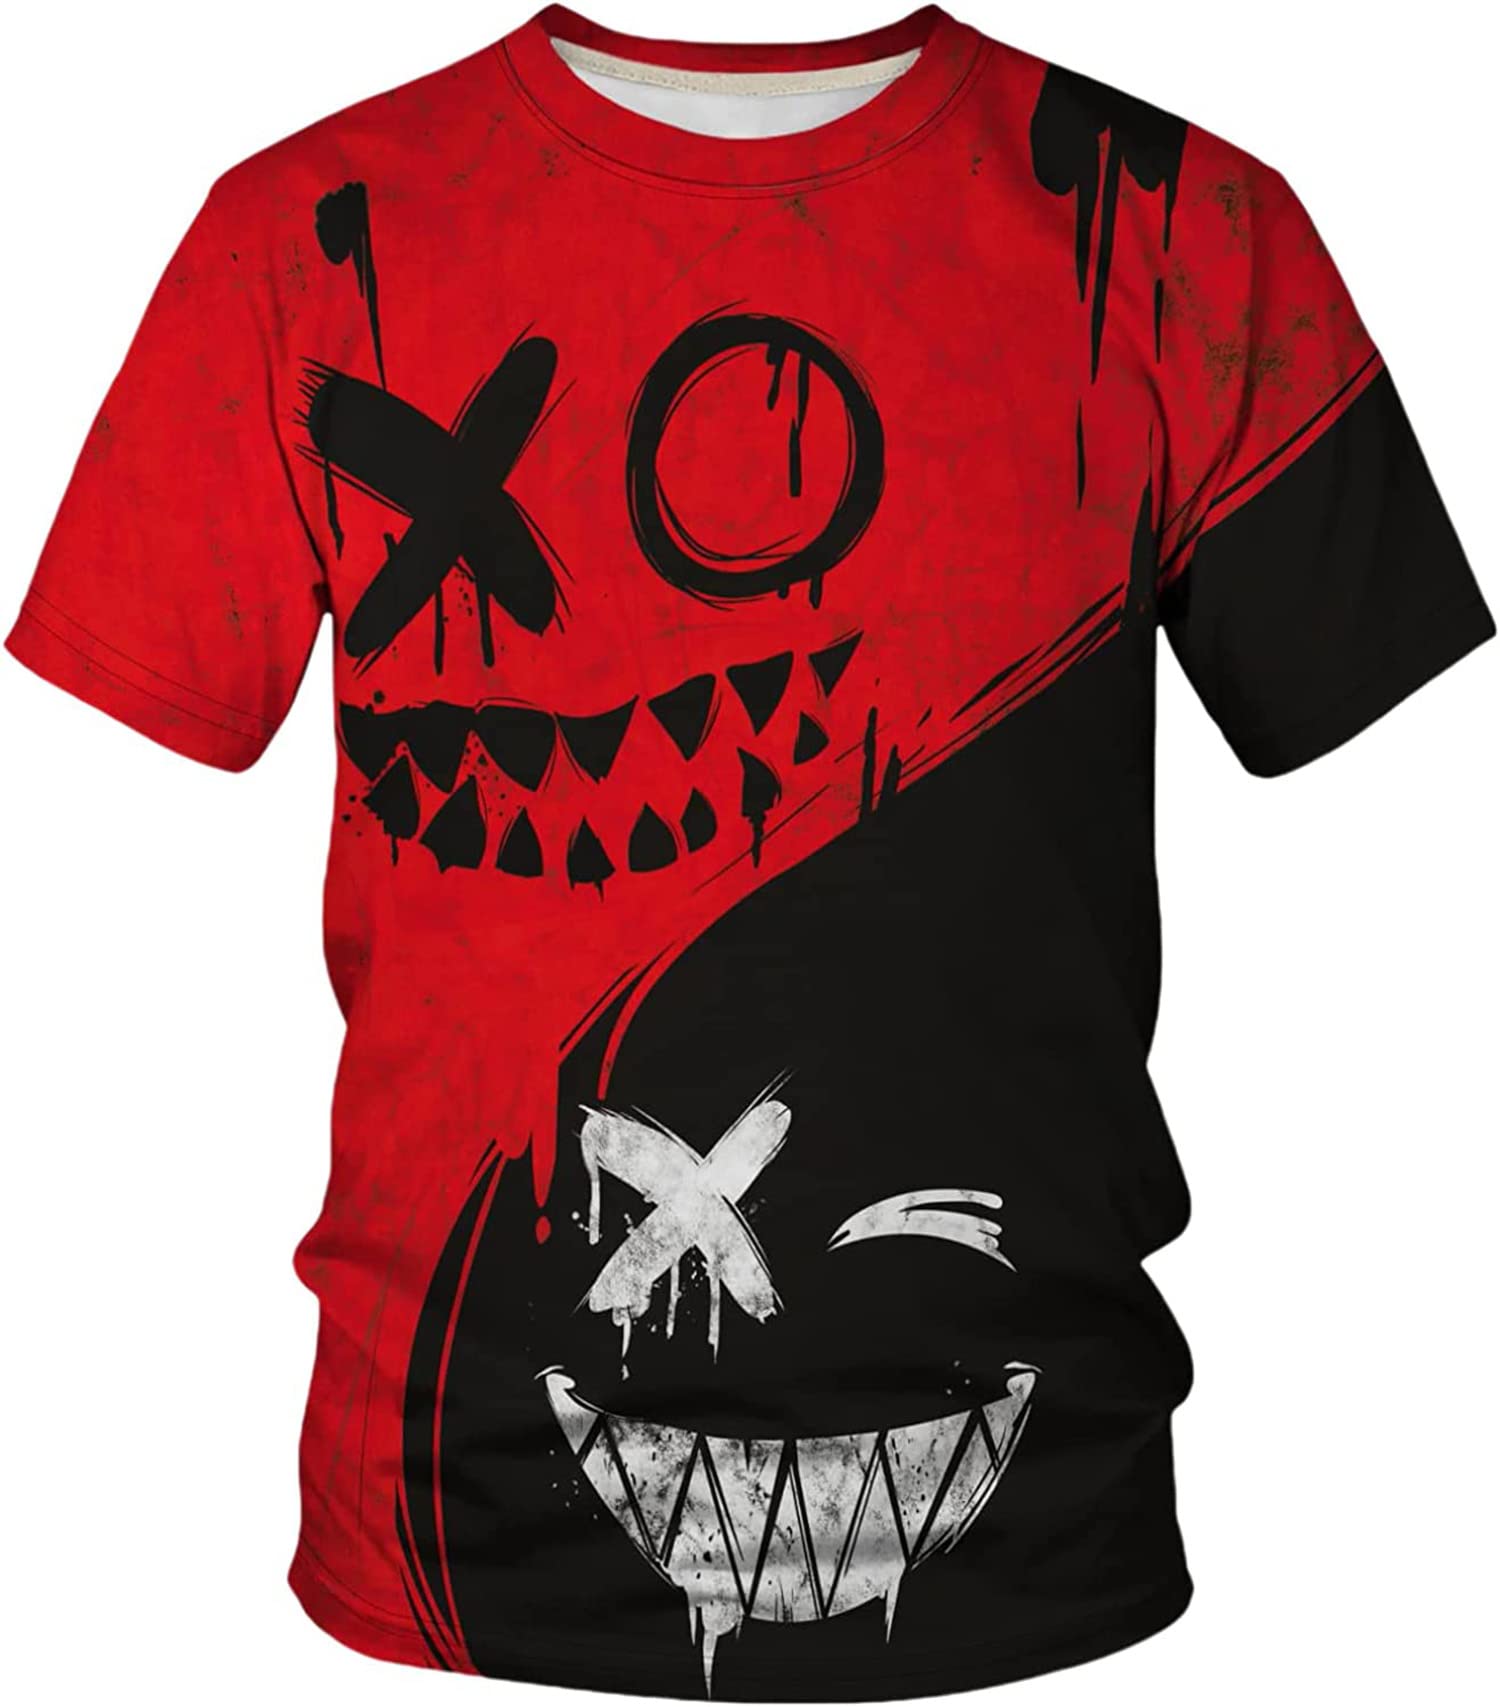 Keasmto 3D Print Cool T Shirts Graphic Design Casual Summer Short Sleeve Fashion Tees Shirt for Men Women